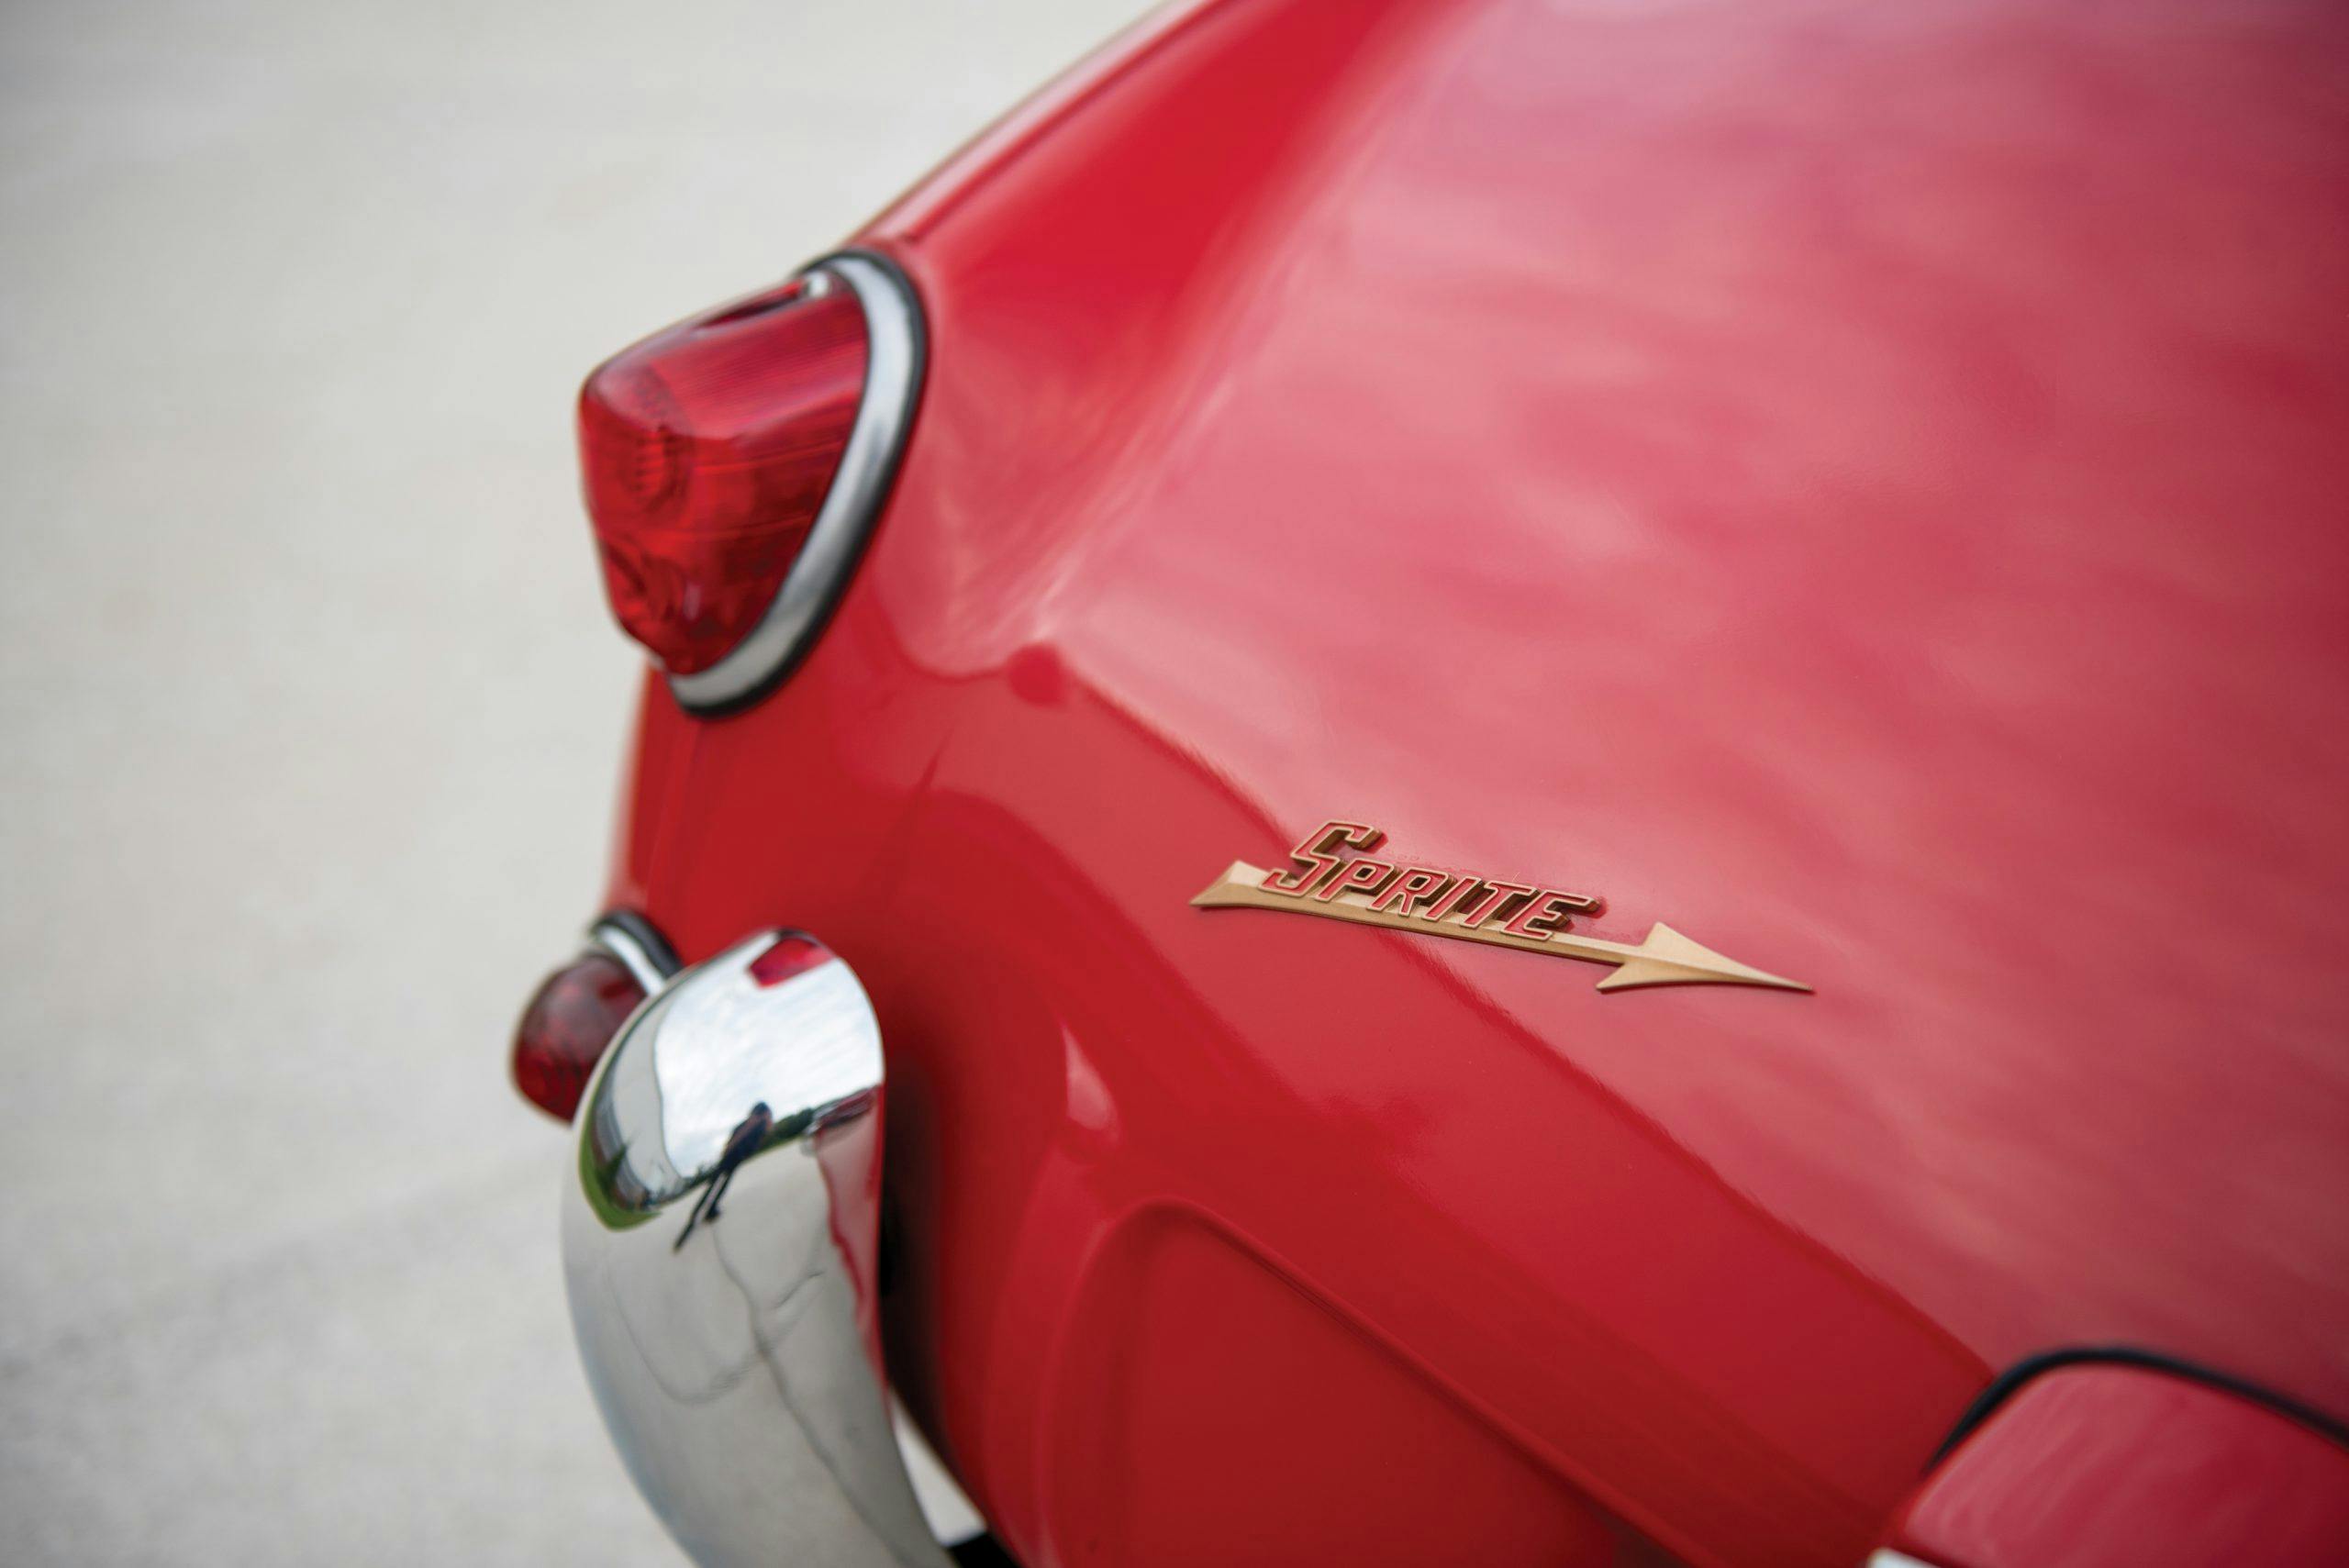 1959 Austin Healey Sprite Bugeye rear badge